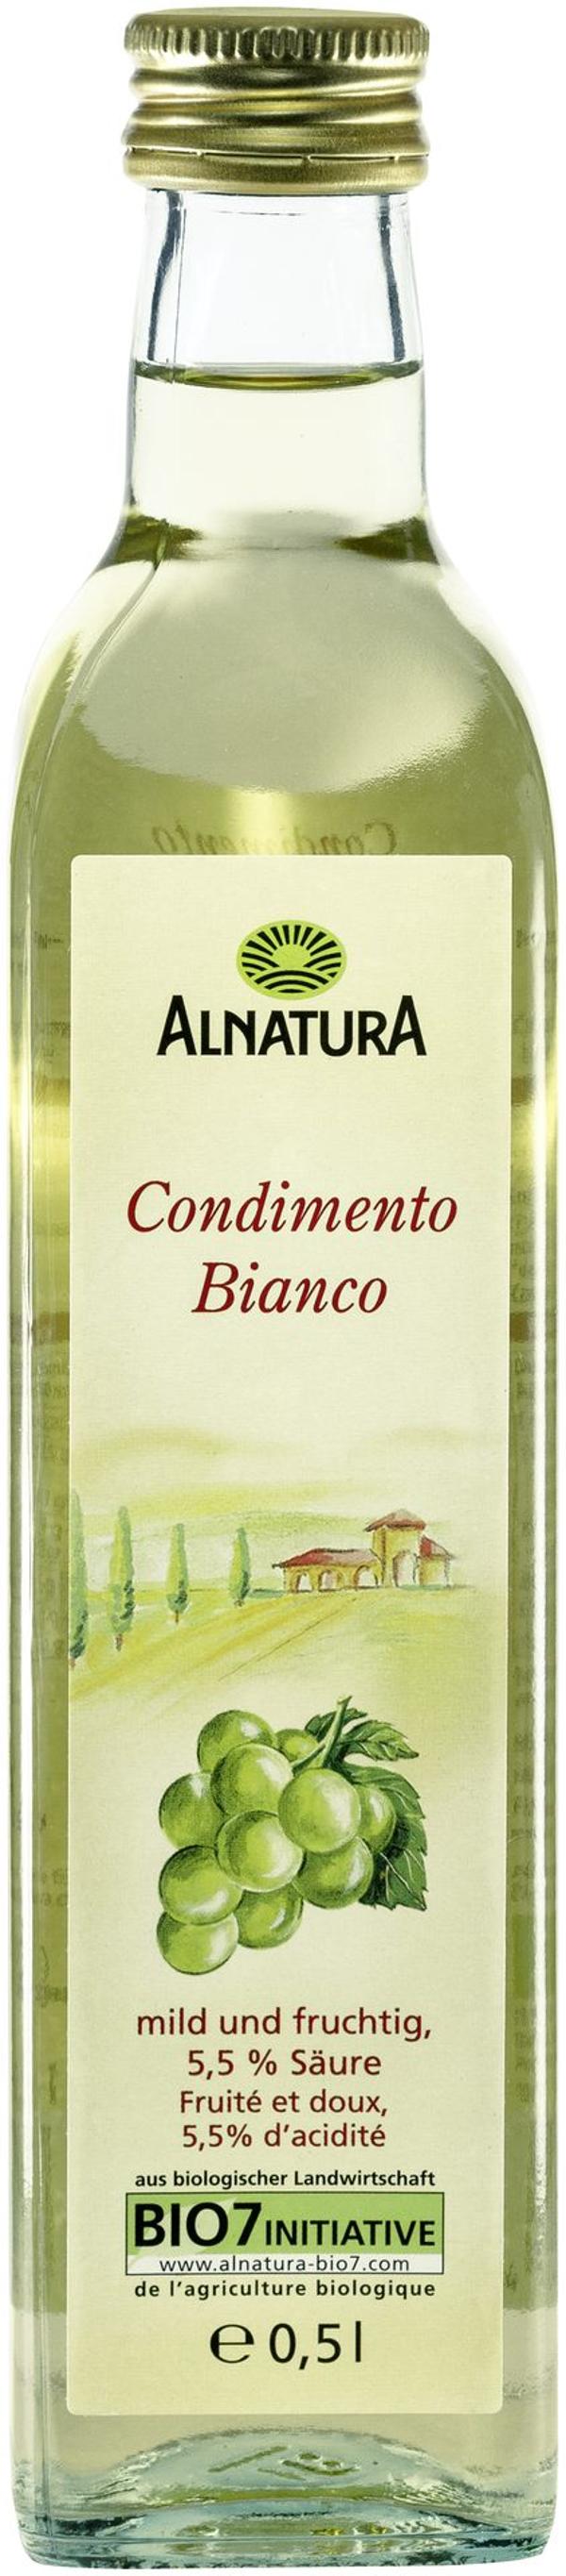 Produktfoto zu Condimento Bianco 500 ml Alnatura